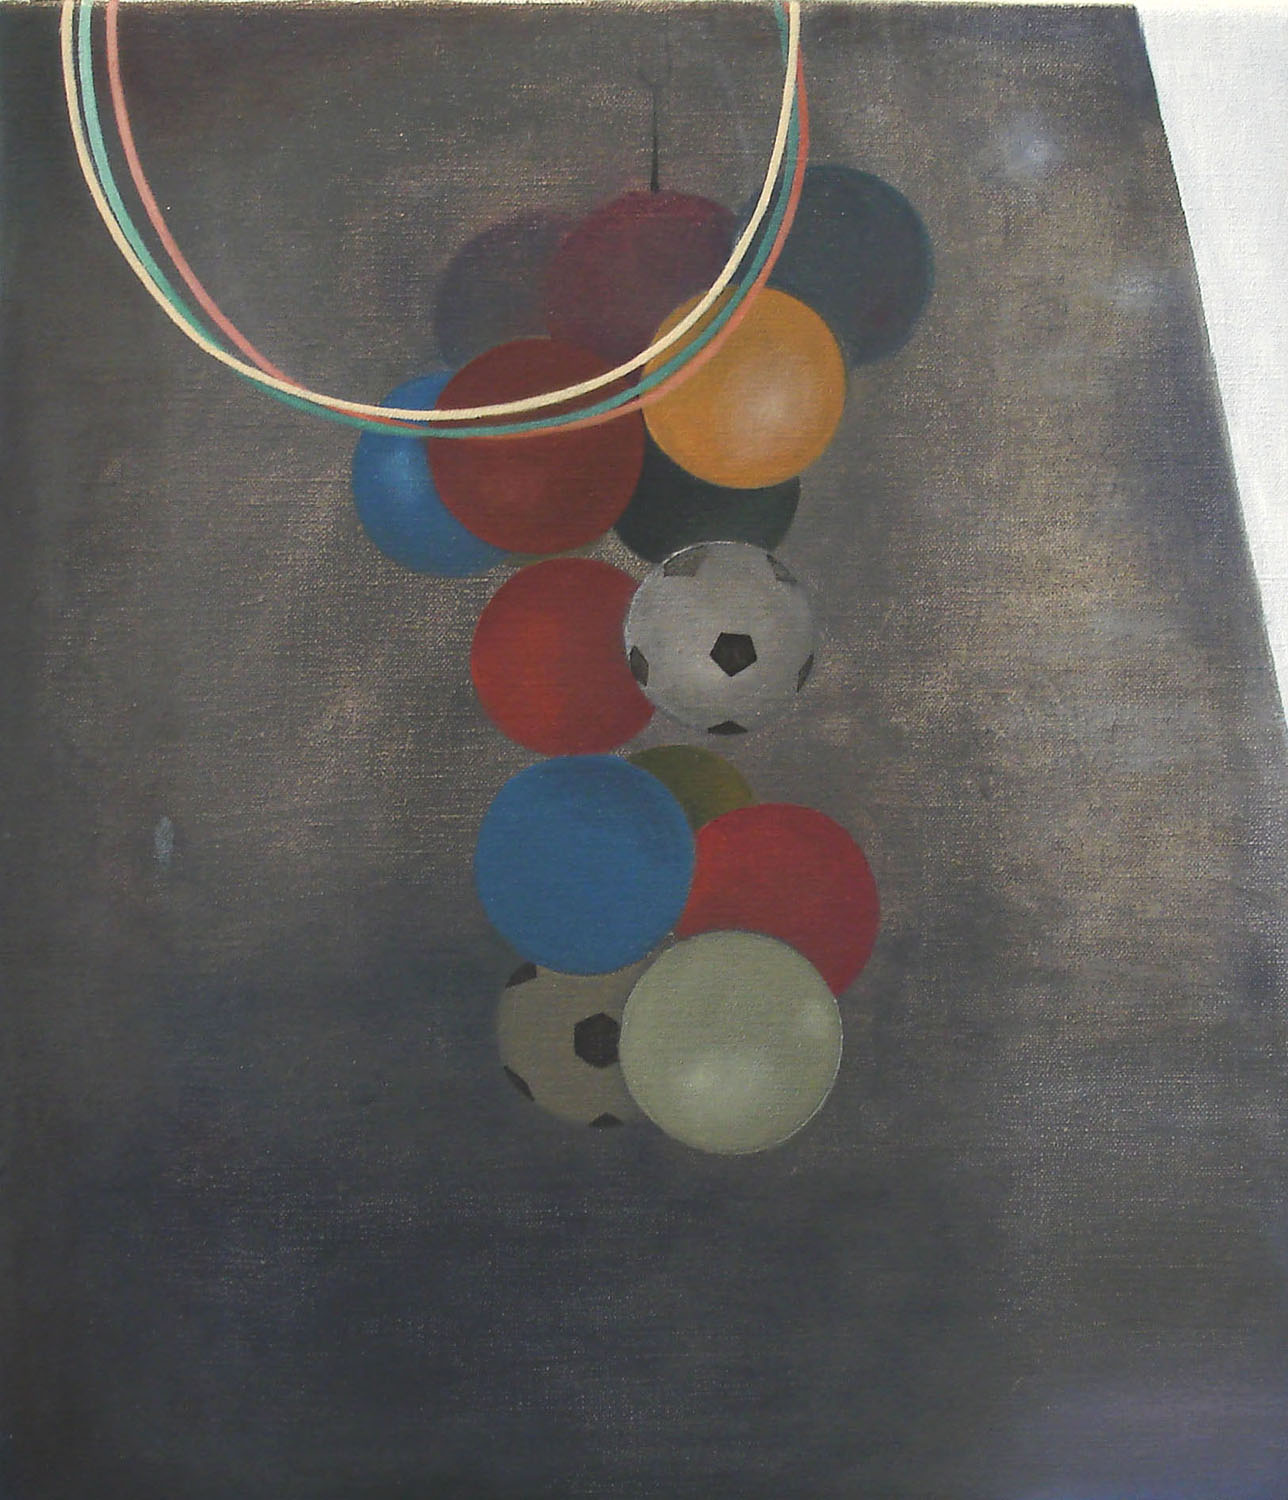   Hoops    2011, oil on canvas, 40 x 35cm  